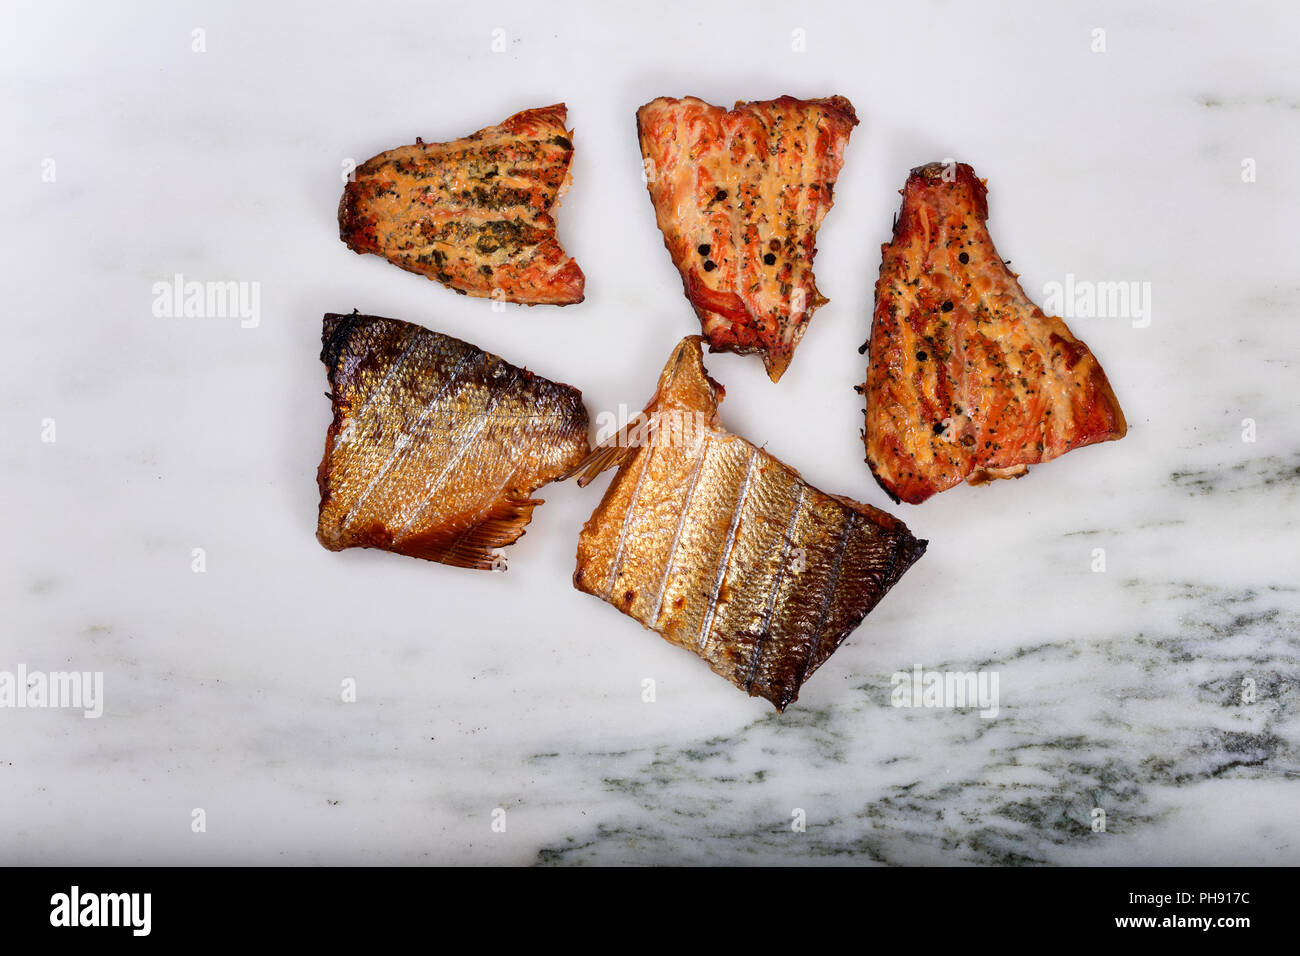 Smoked salmon fillets on marble stone countertop Stock Photo